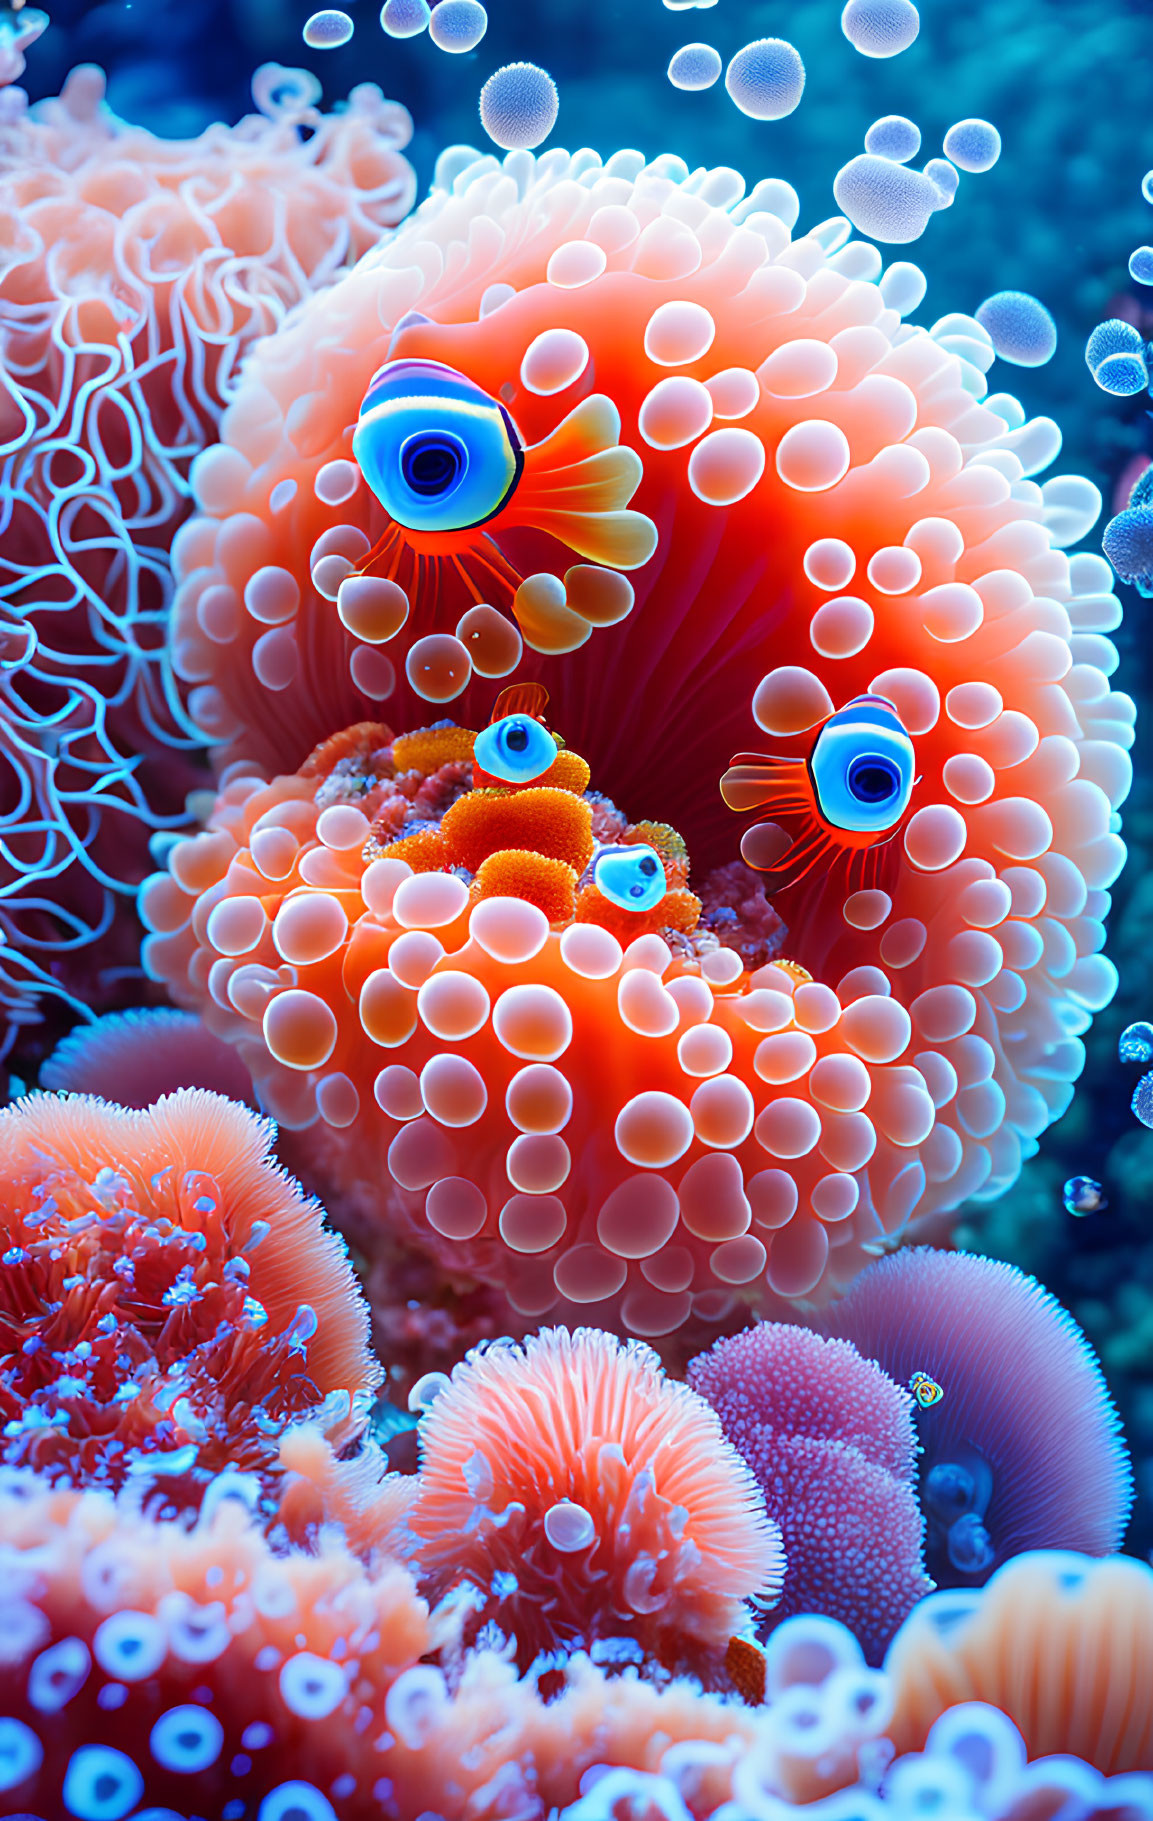 Colorful Clownfish in Vibrant Underwater Coral Scene